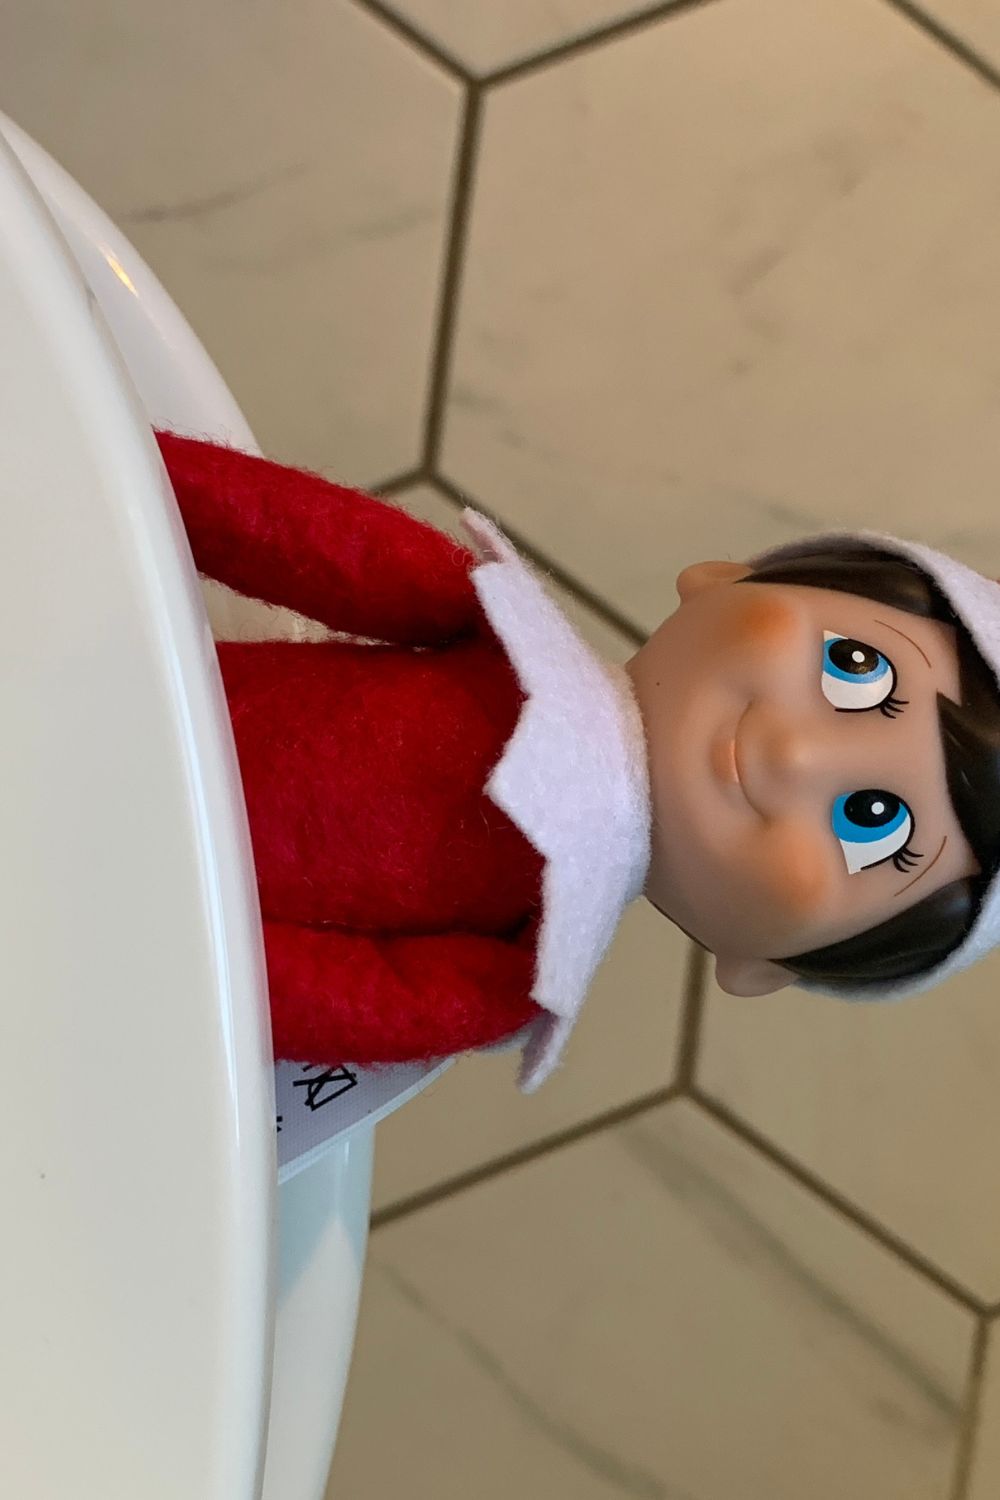 Elf on the Shelf hiding on the toilet